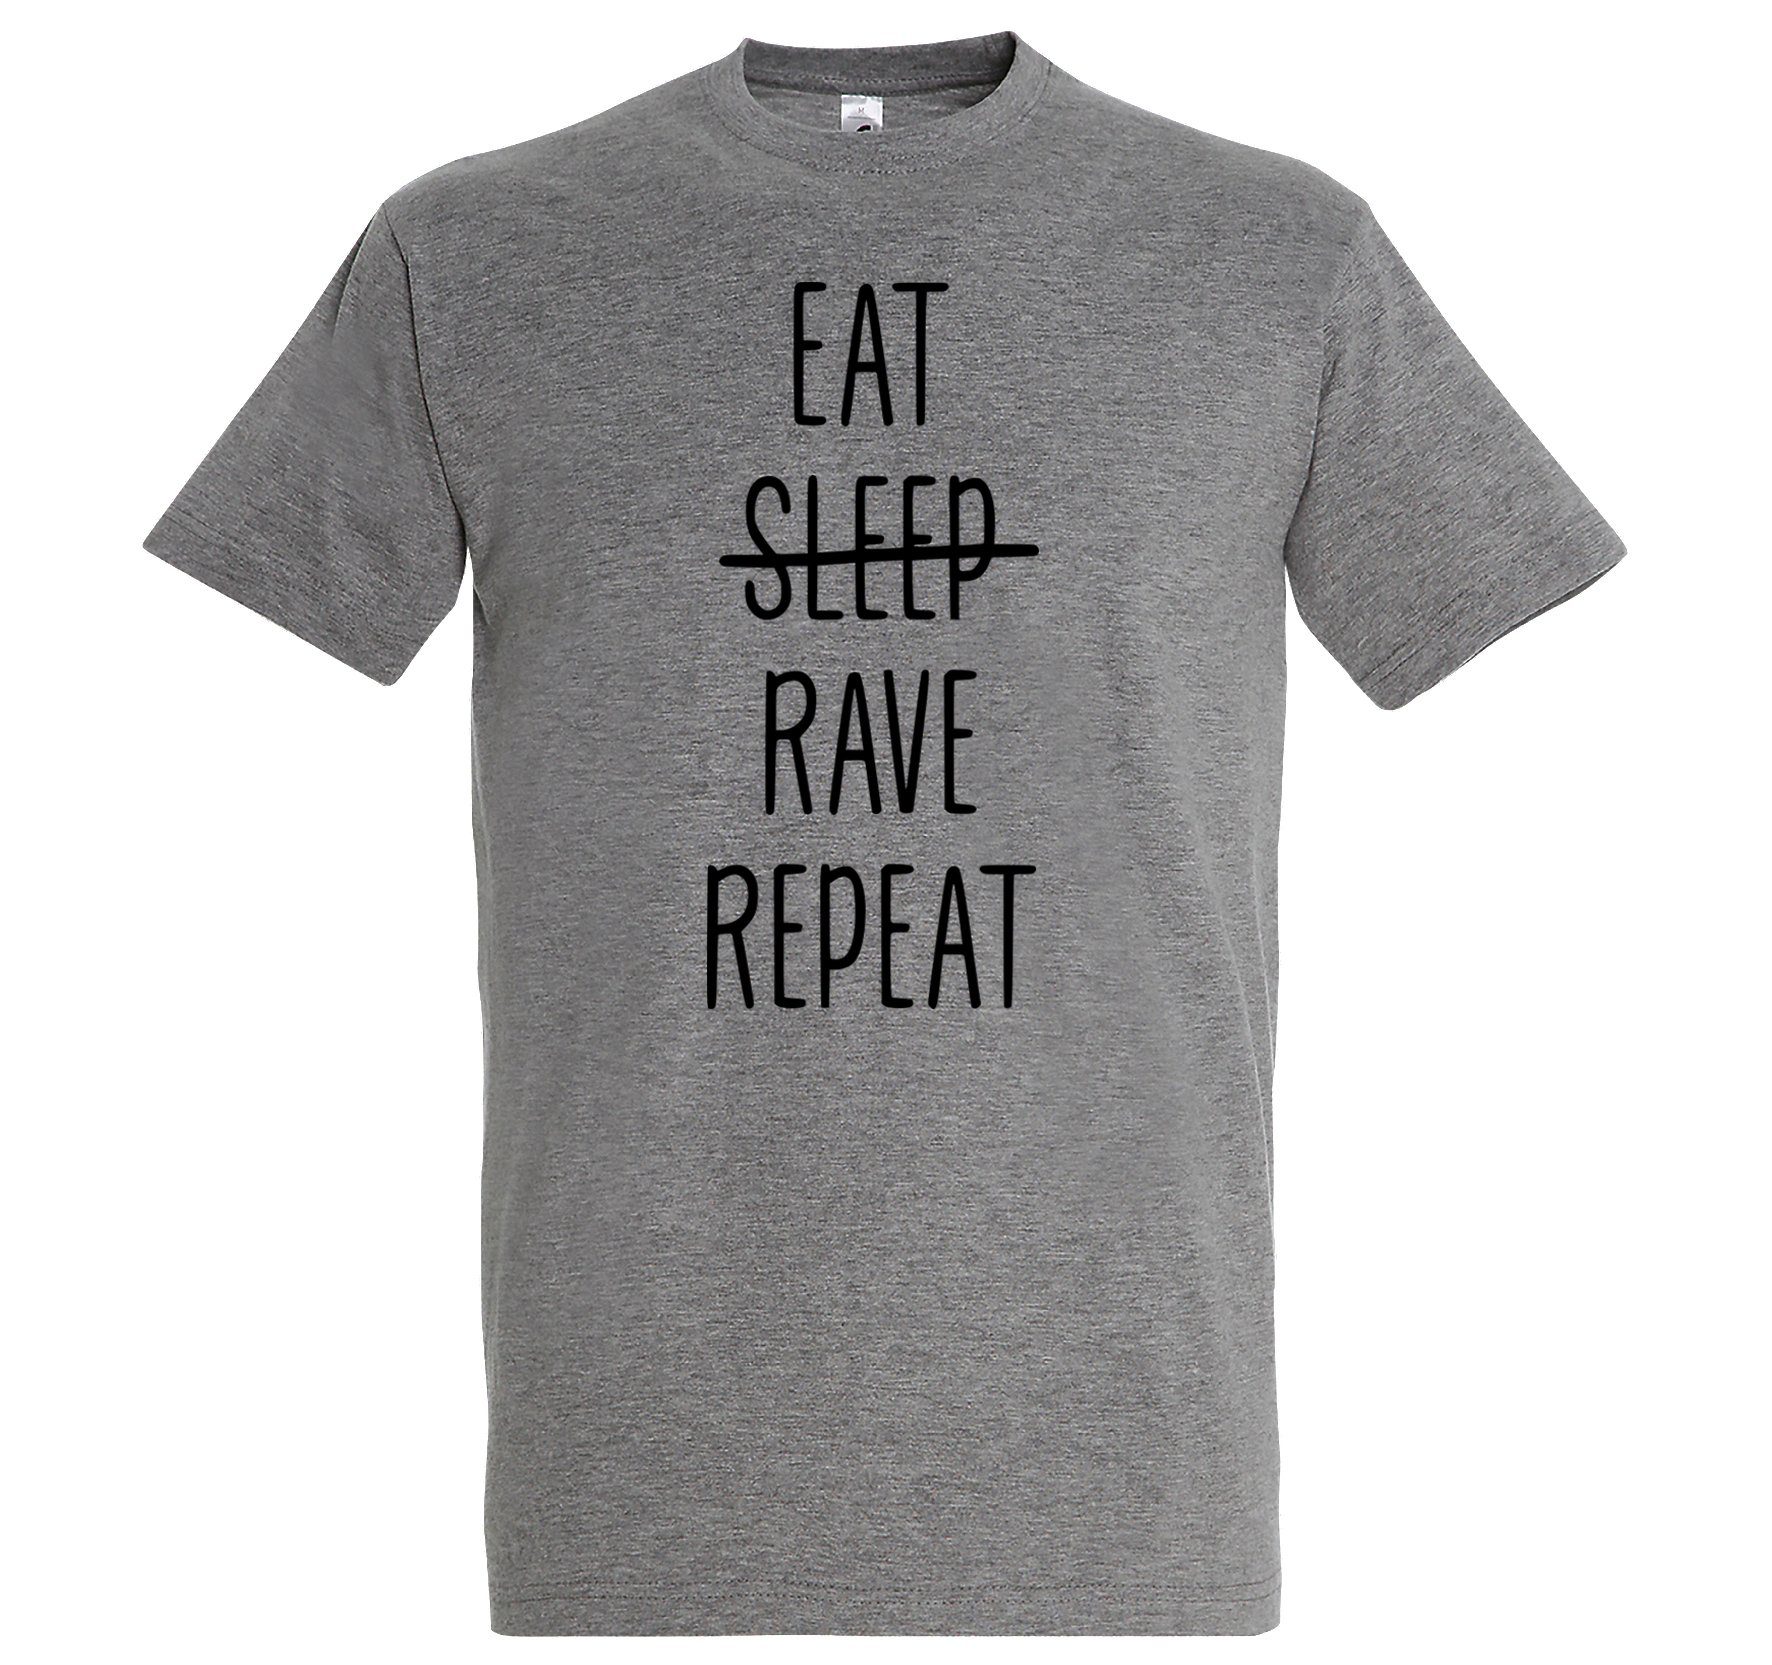 Rave Frontprint Repeat trendigem Youth T-Shirt Designz Herren Eat mit Grau T-Shirt